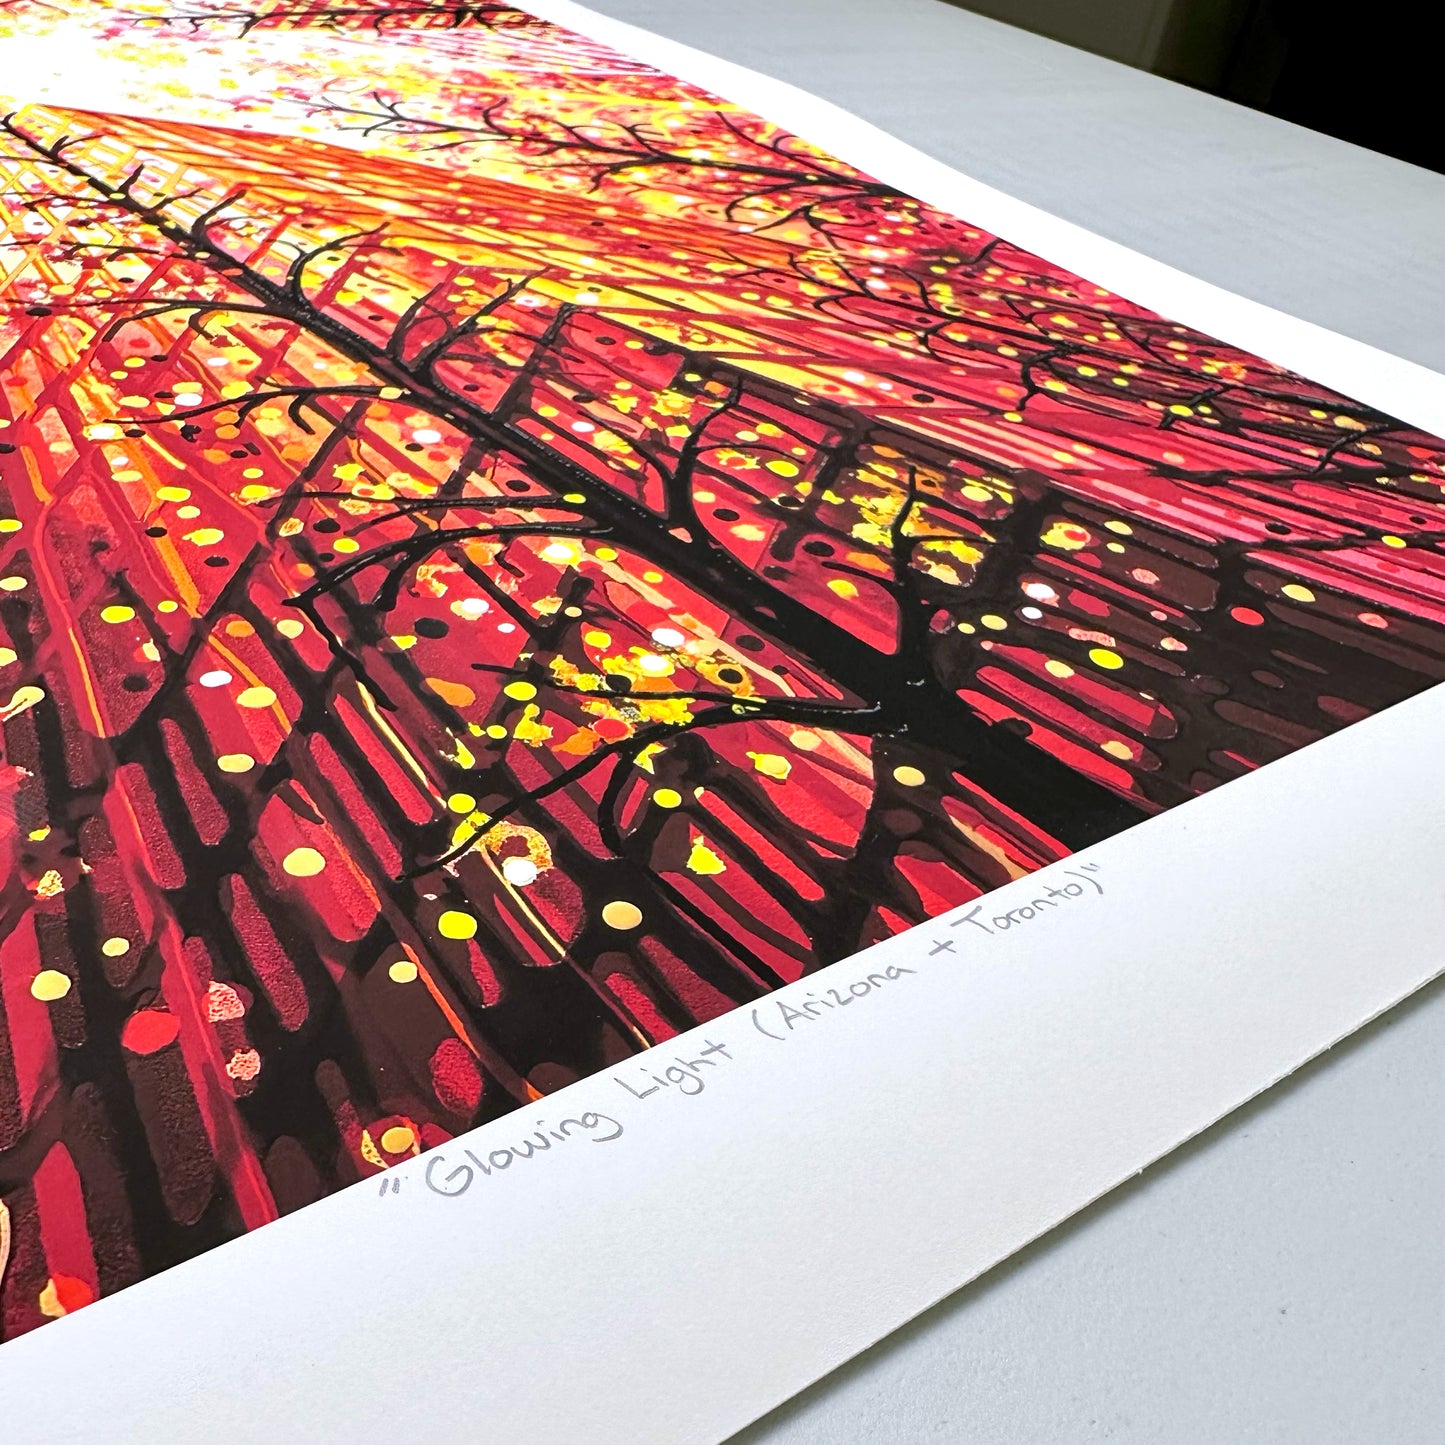 Glowing Light (Arizona + Toronto), Limited Edition Print